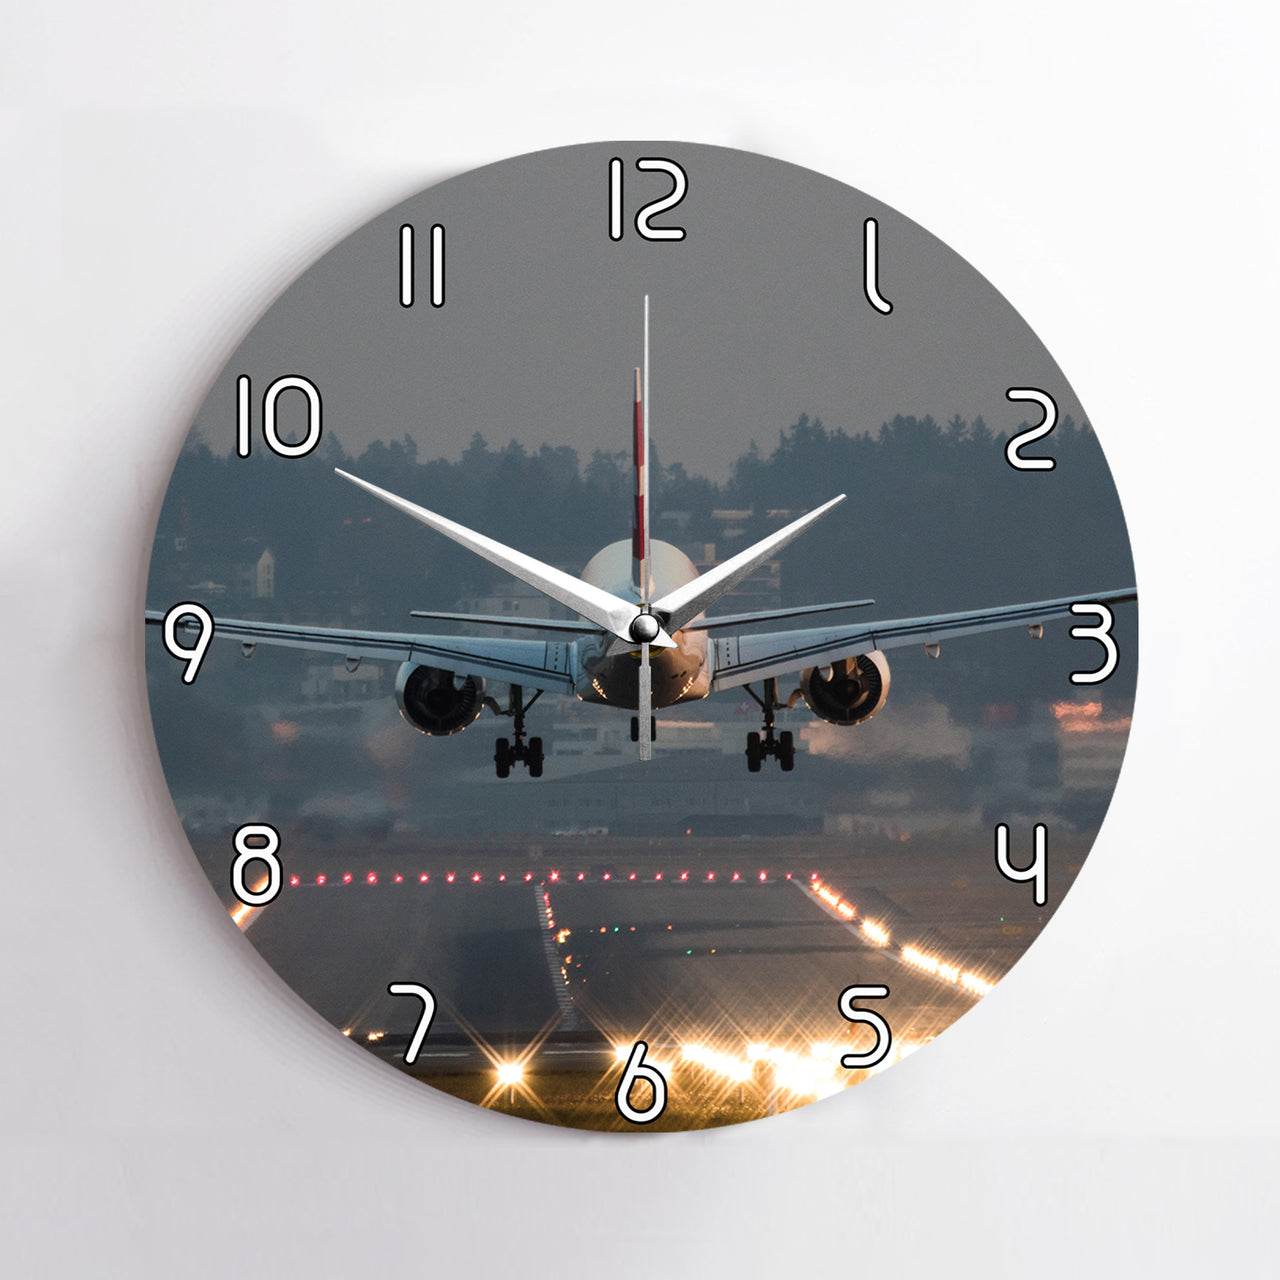 Magnificant Landing Printed Wall Clocks